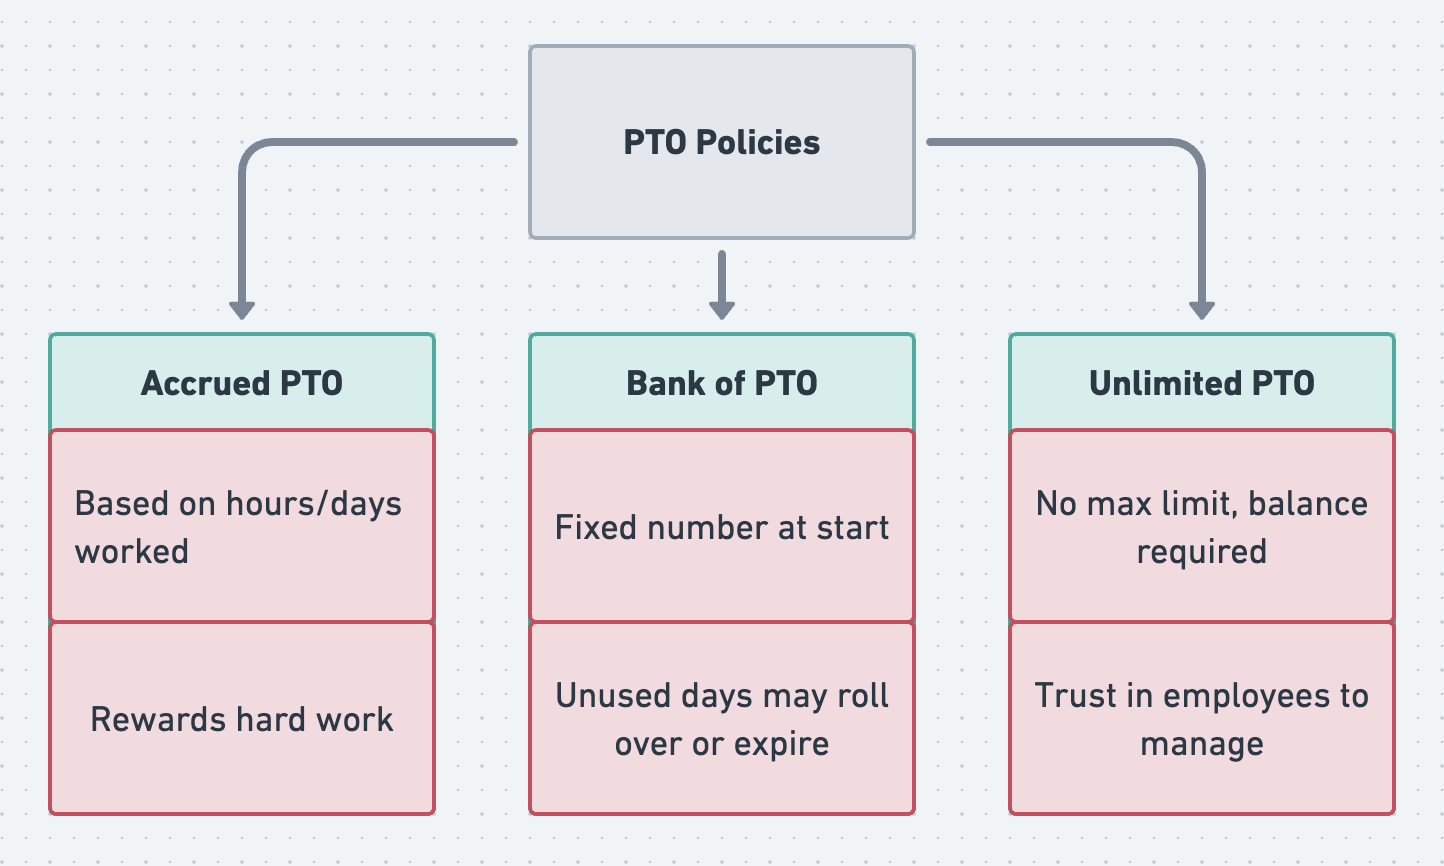 PTO policies